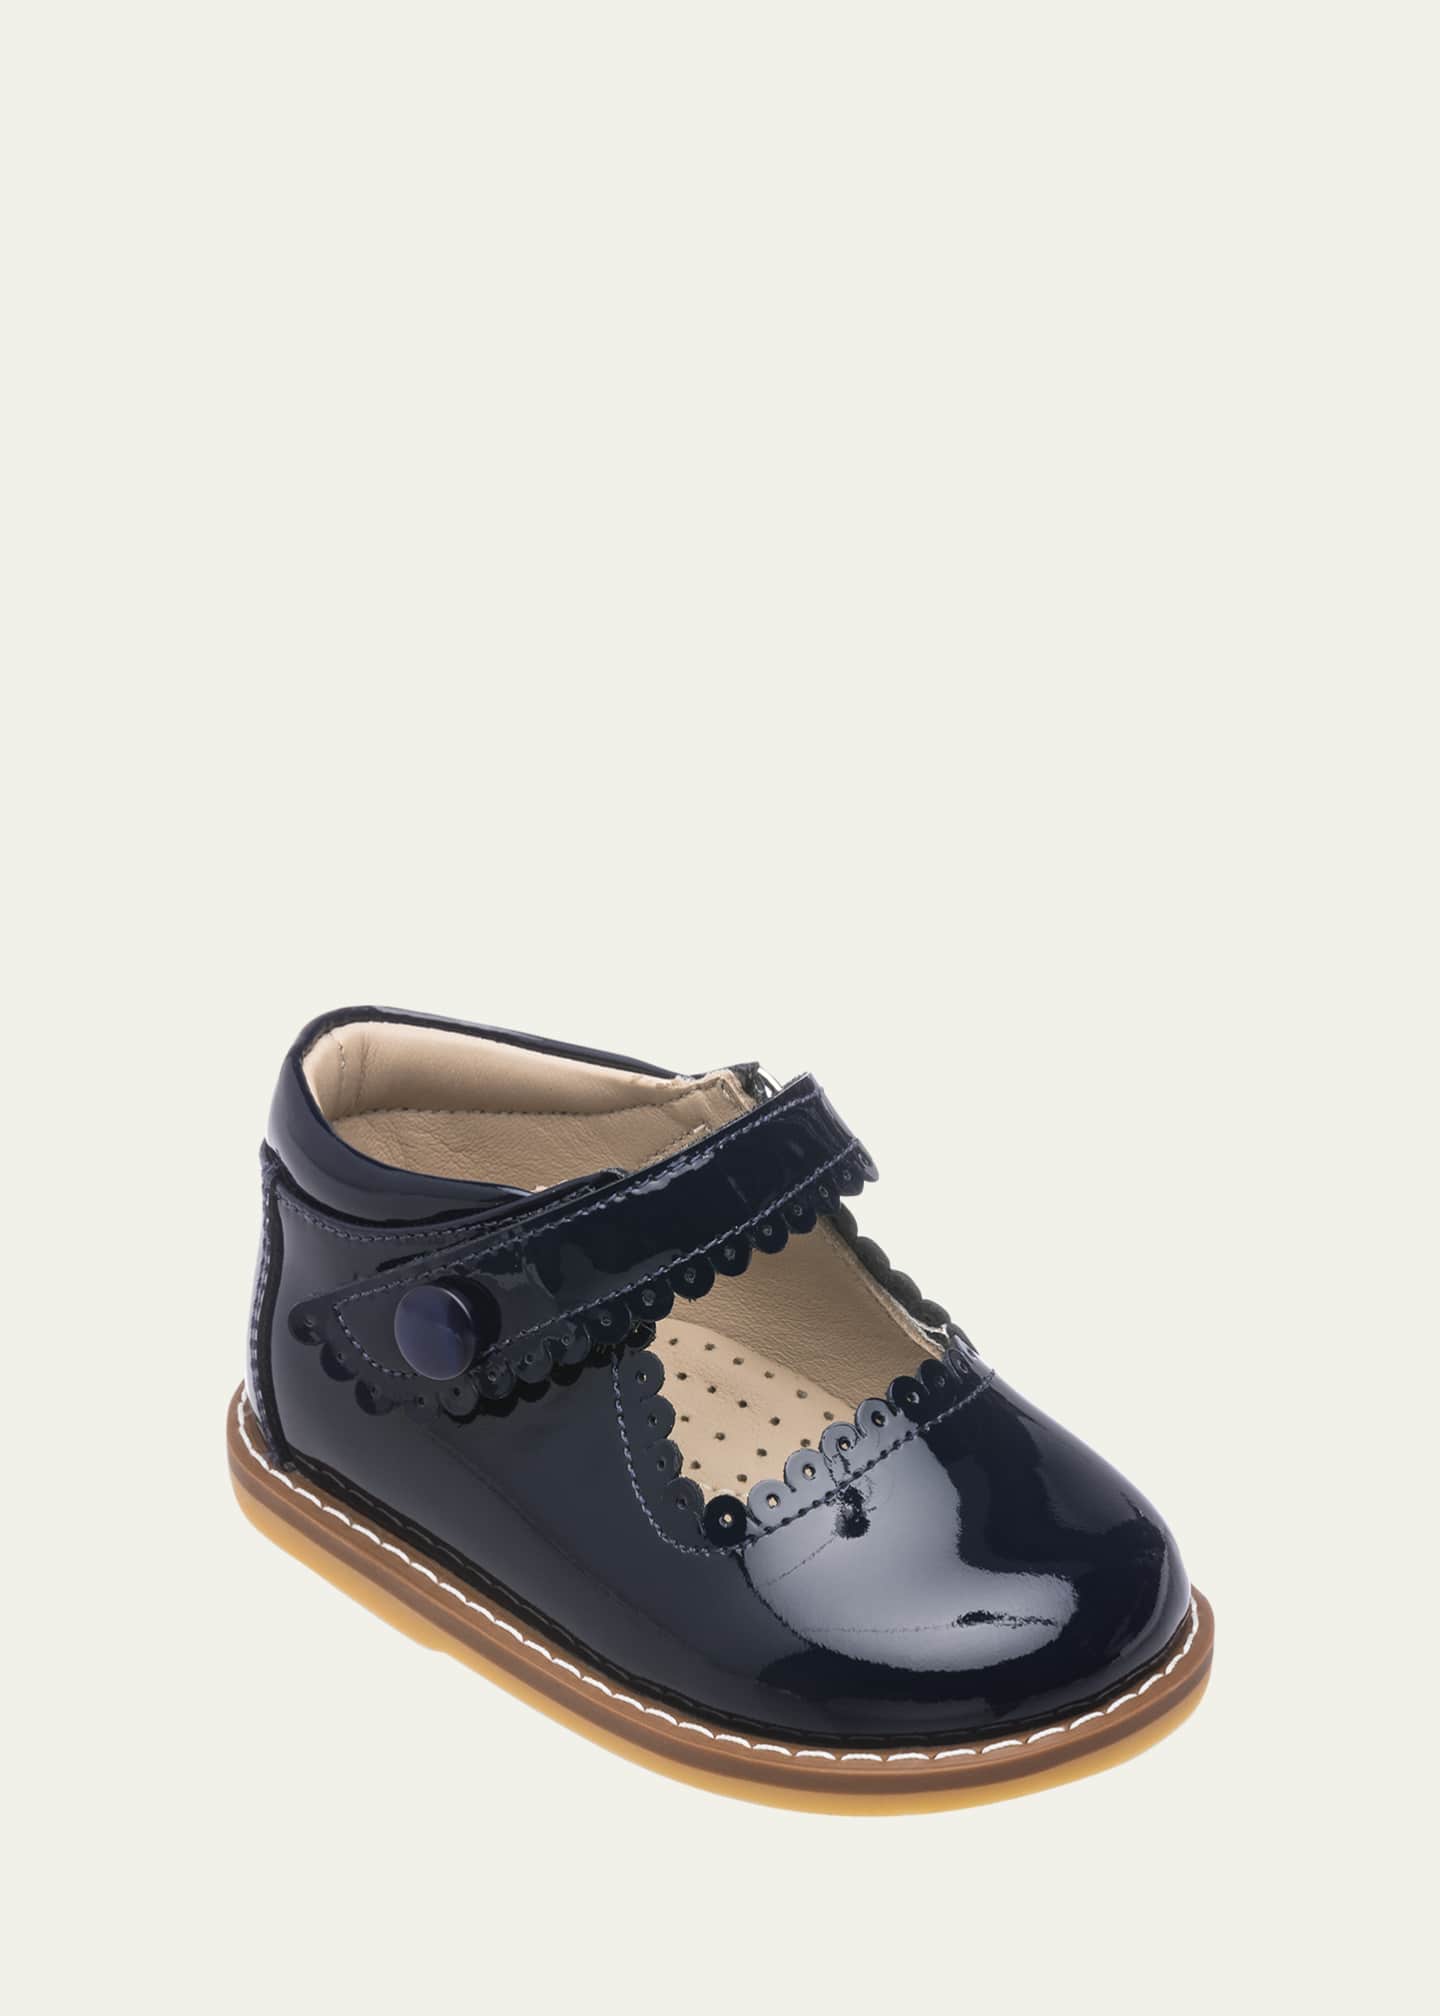 Elephantito Scalloped Leather Mary Janes, Toddler - Bergdorf Goodman